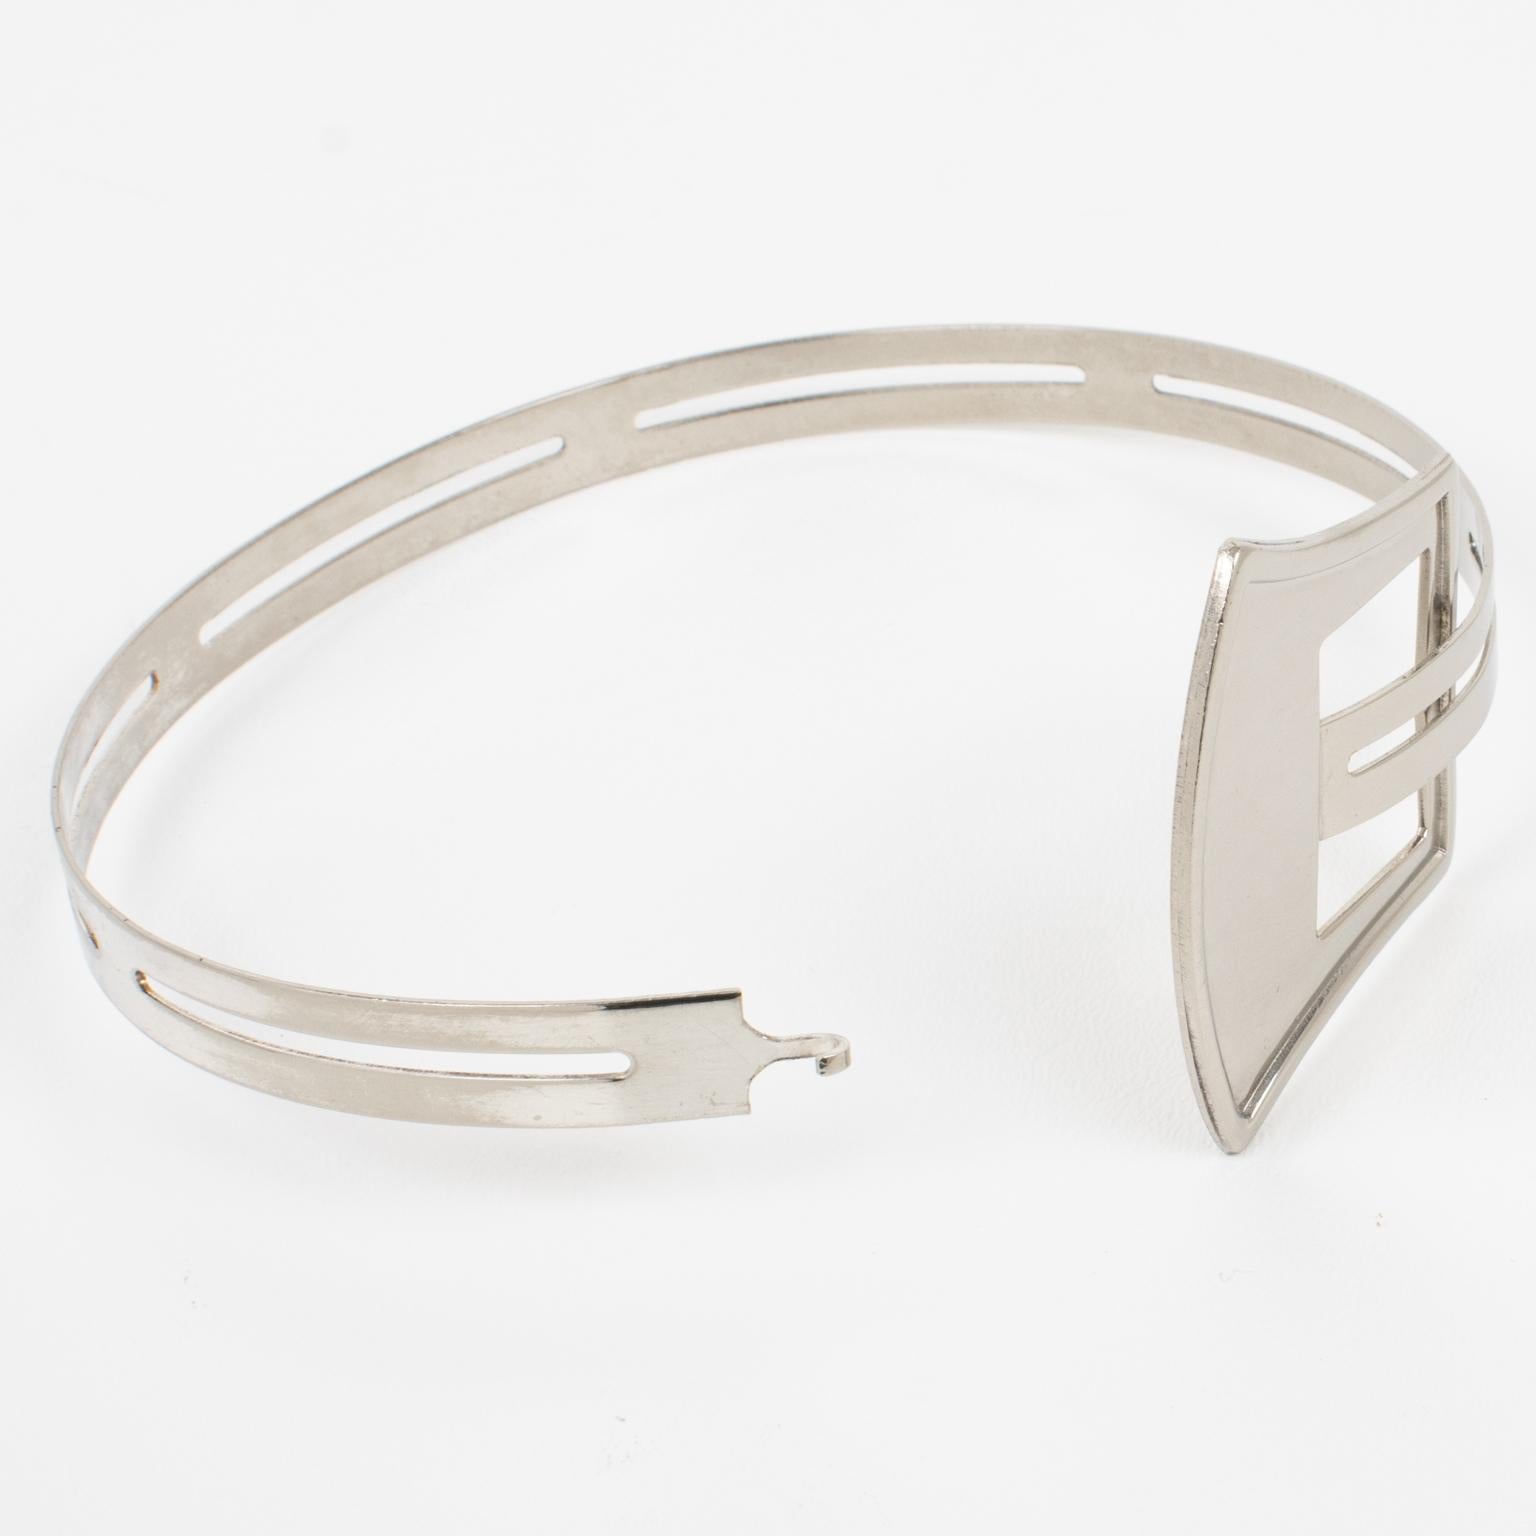 Modernist Silvered Metal Rigid Collar Necklace with Belt Buckle Design For Sale 2